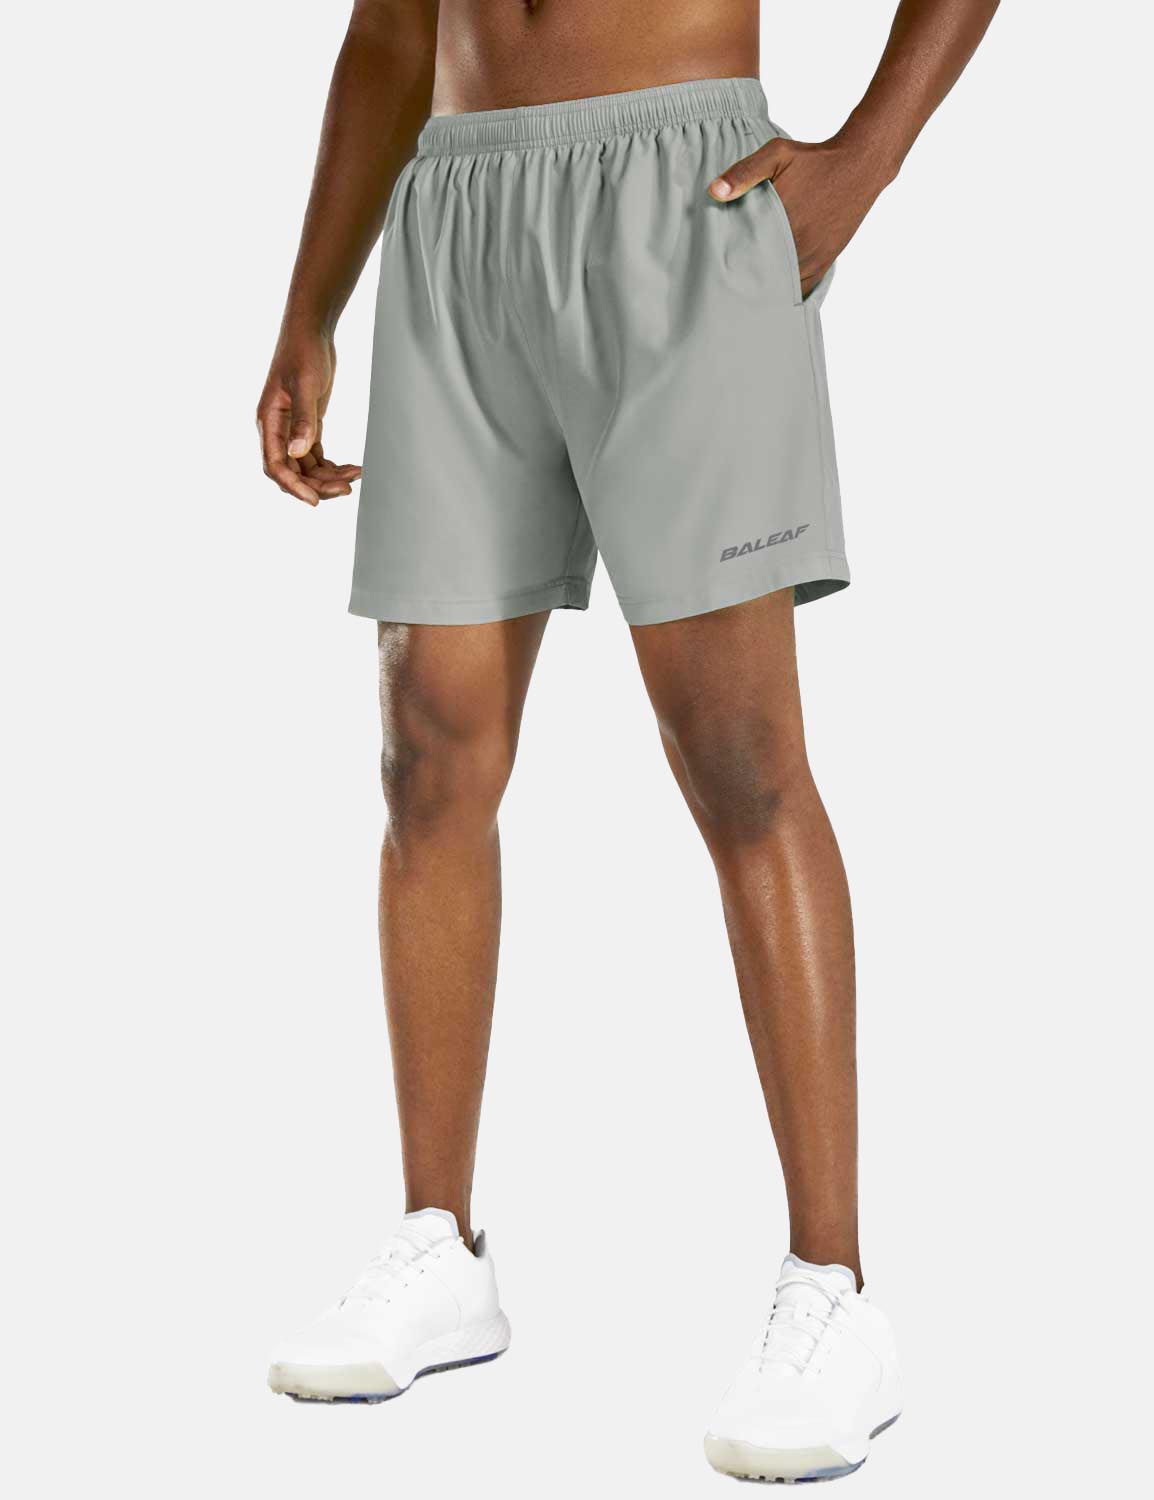 Baleaf Men's 5'' Light-Weight Quick Dry Fully Lined Shorts abd215 Light Gray Main